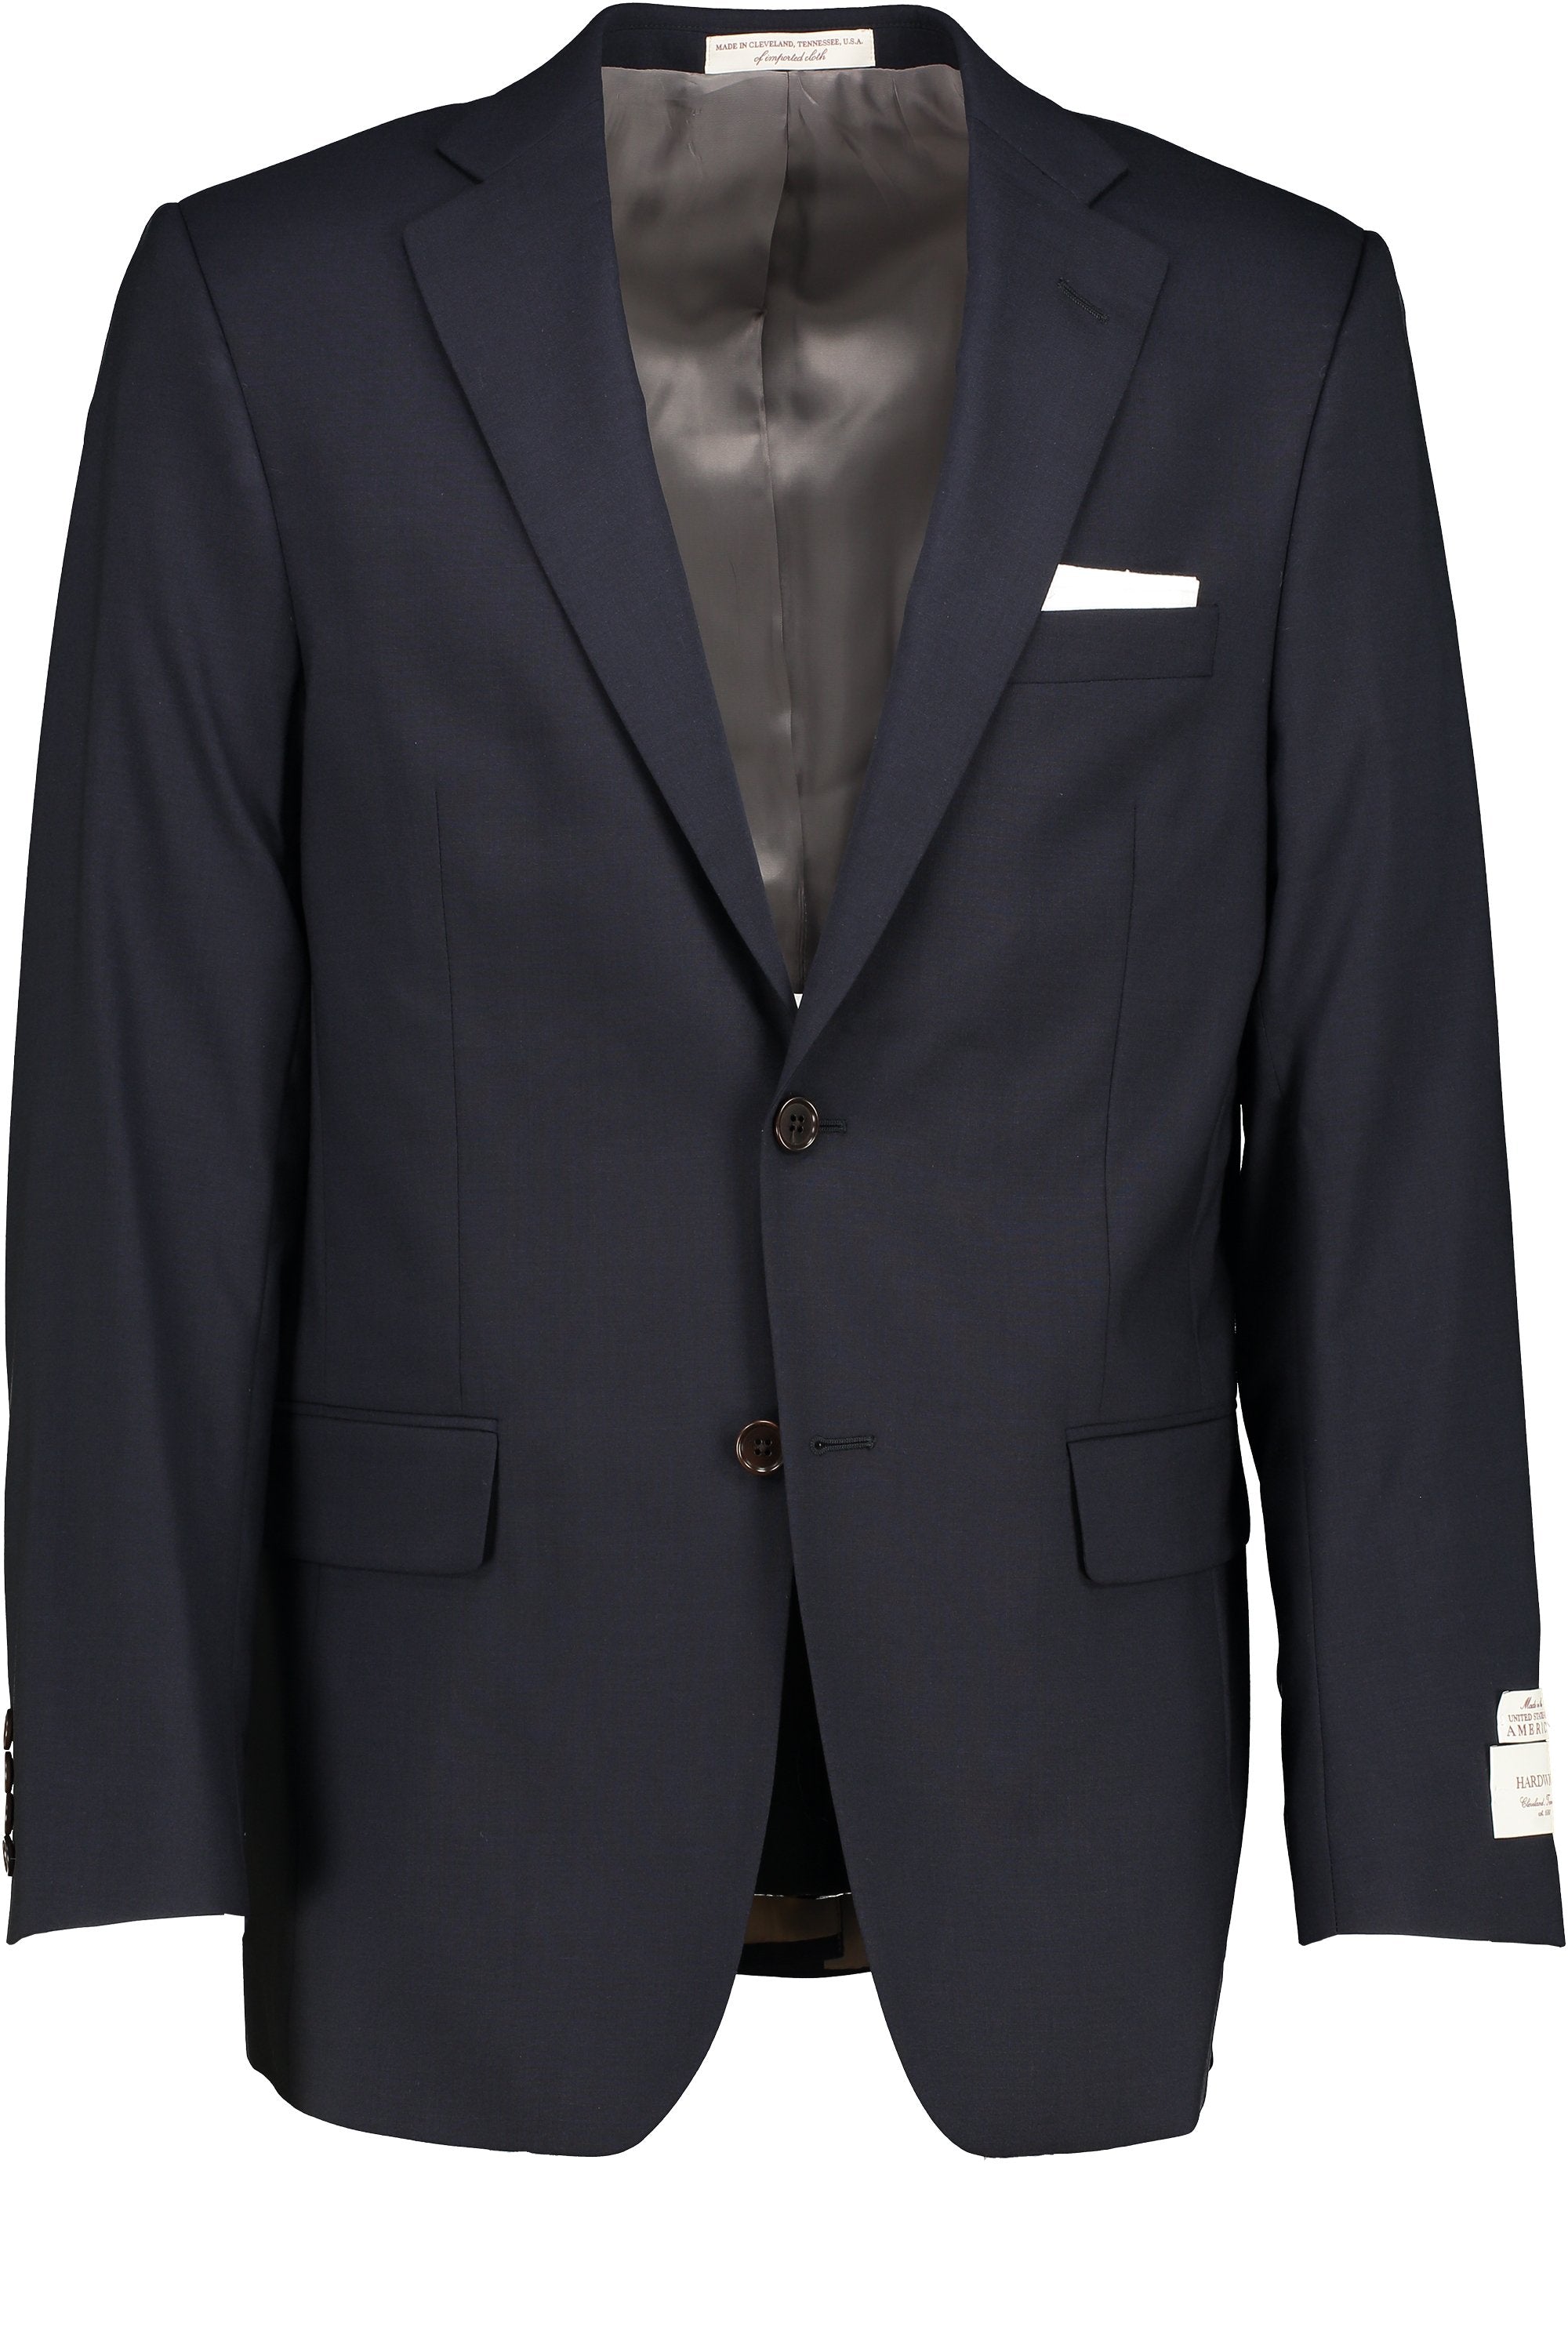 Men's Suit Separate - Coat Classic Cut NAVY 98/2 WOOL/LYCRA SUPER100